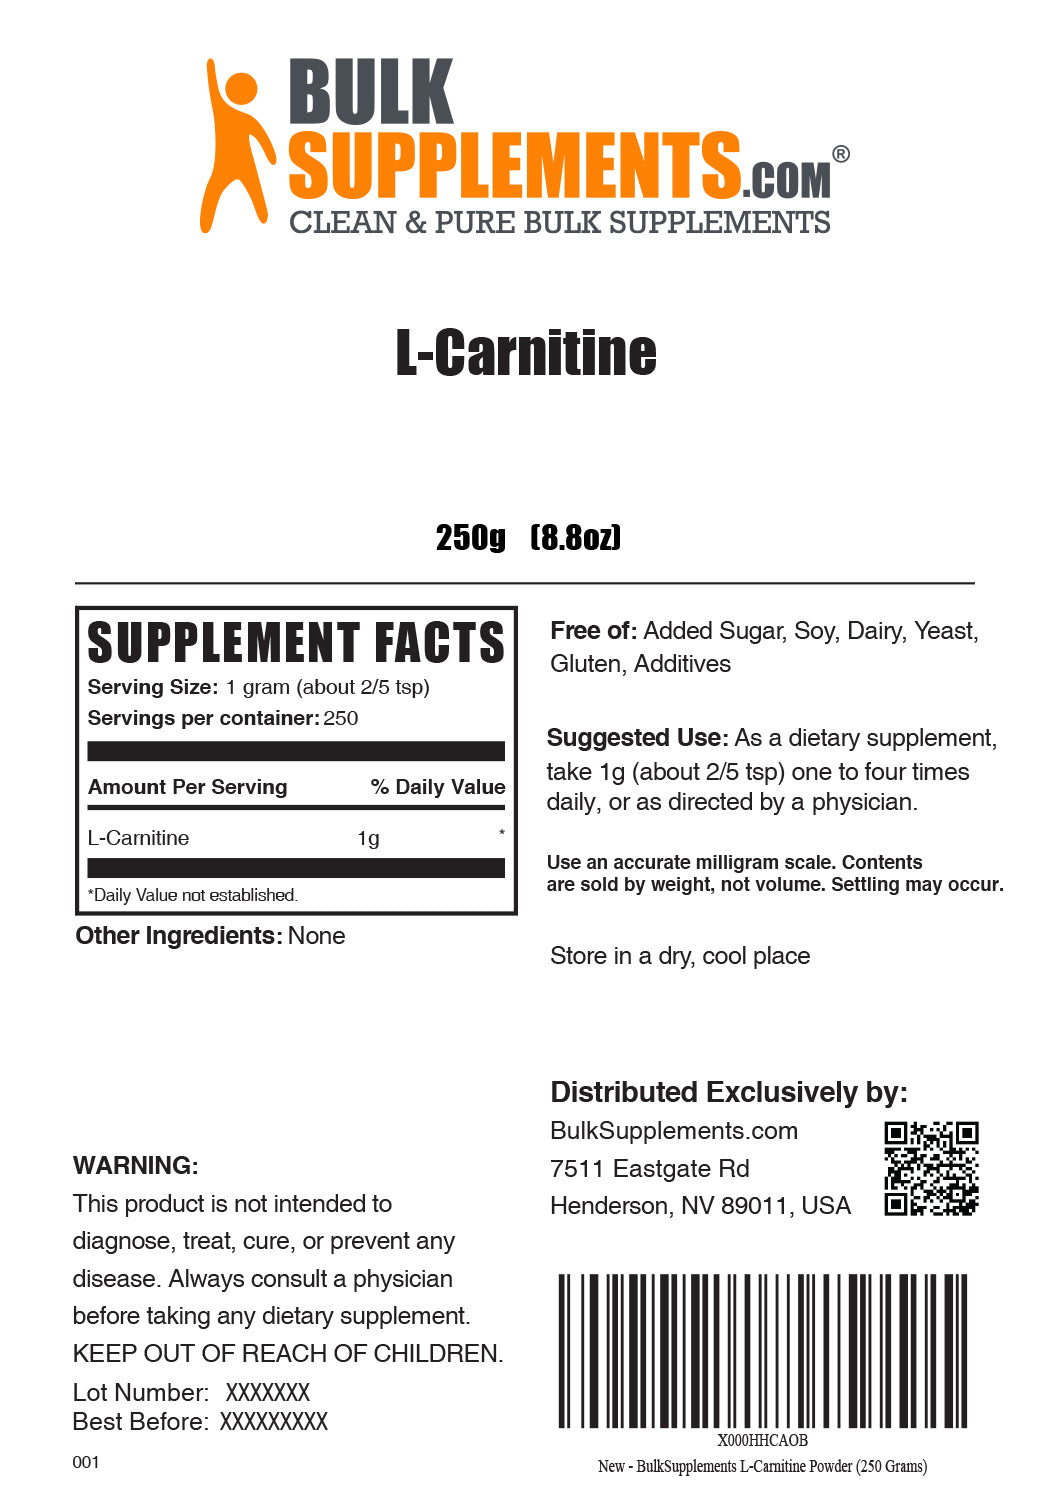 L-Carnitine Powder Label 250g